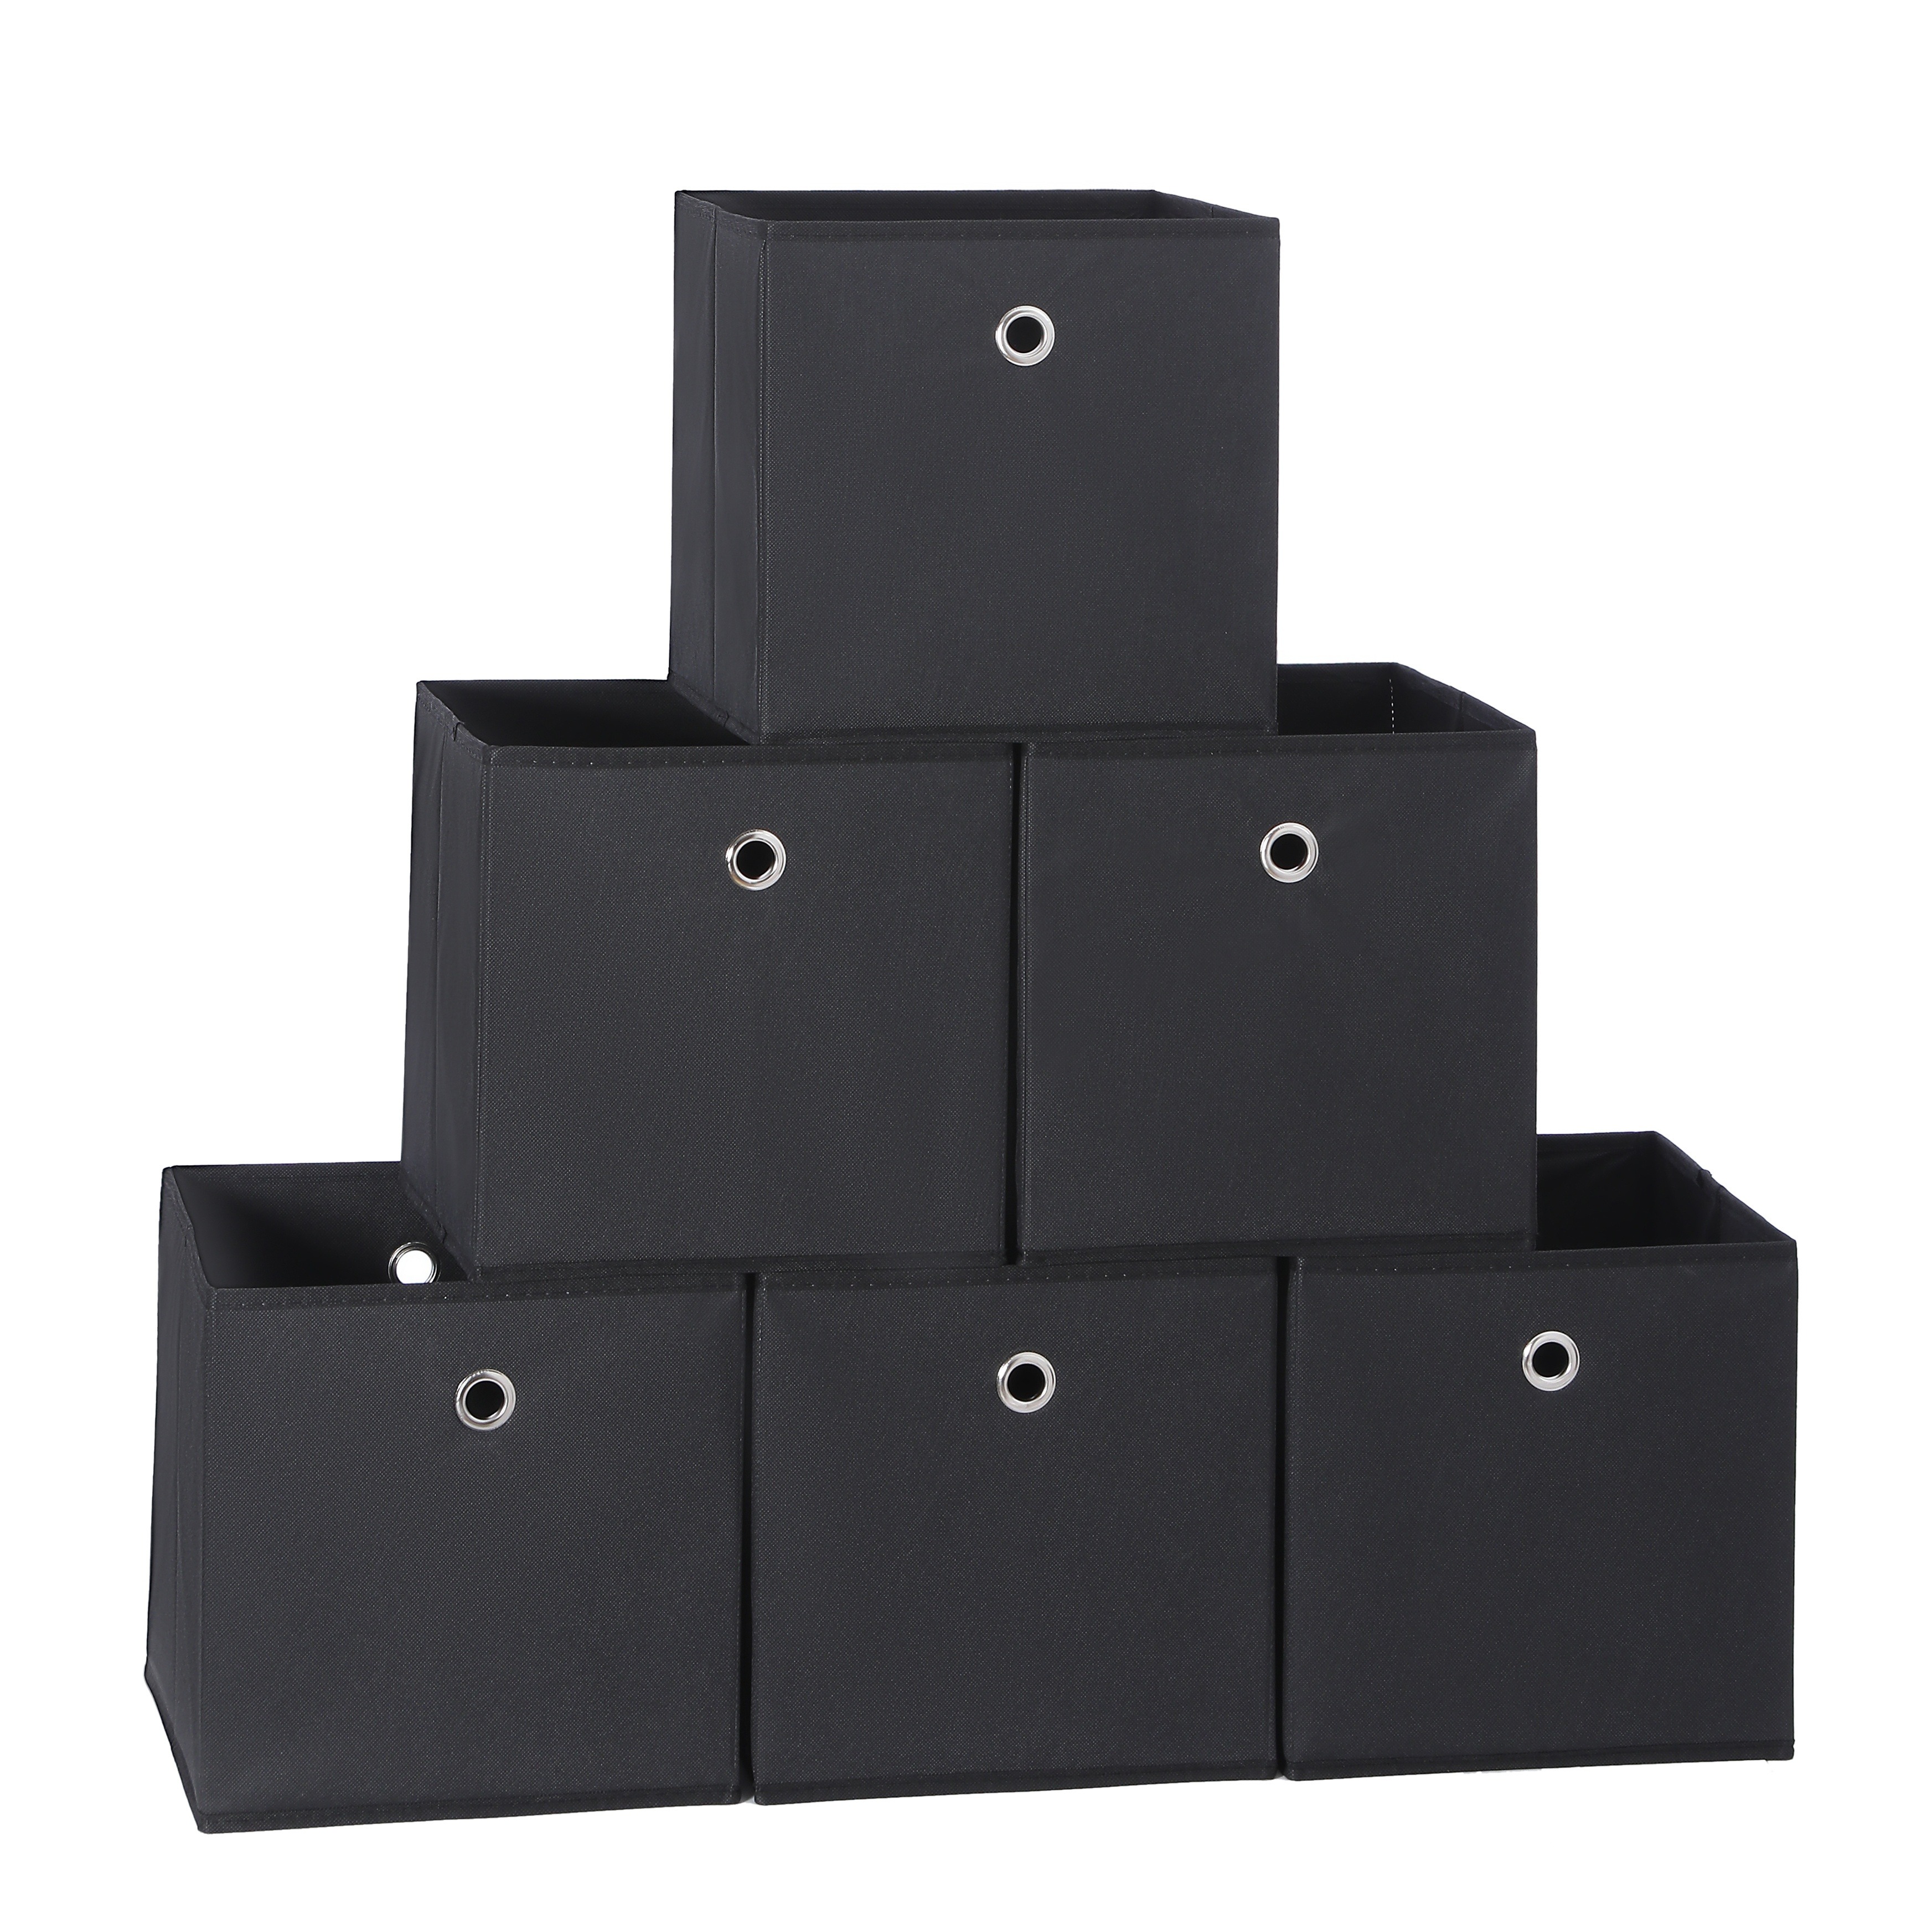 EZOWare Small Storage Bins Baskets, Pack of 6 Foldable Drawer Dresser  Desktop Organizer Cubes Set with Handles -12 x 7 x 4 inch - Dark Gray 